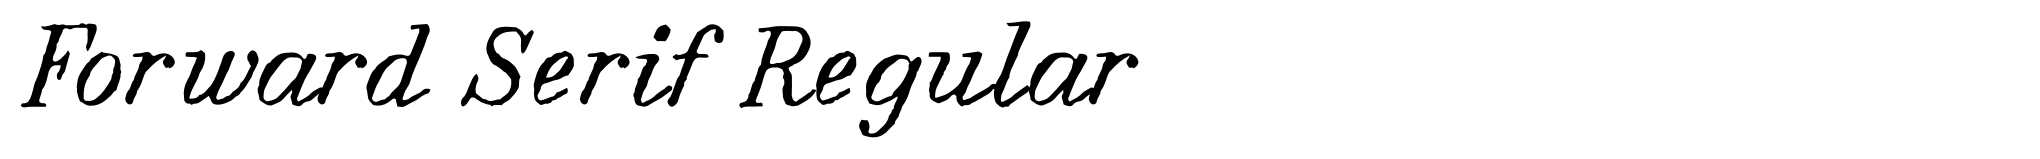 Forward Serif Regular image